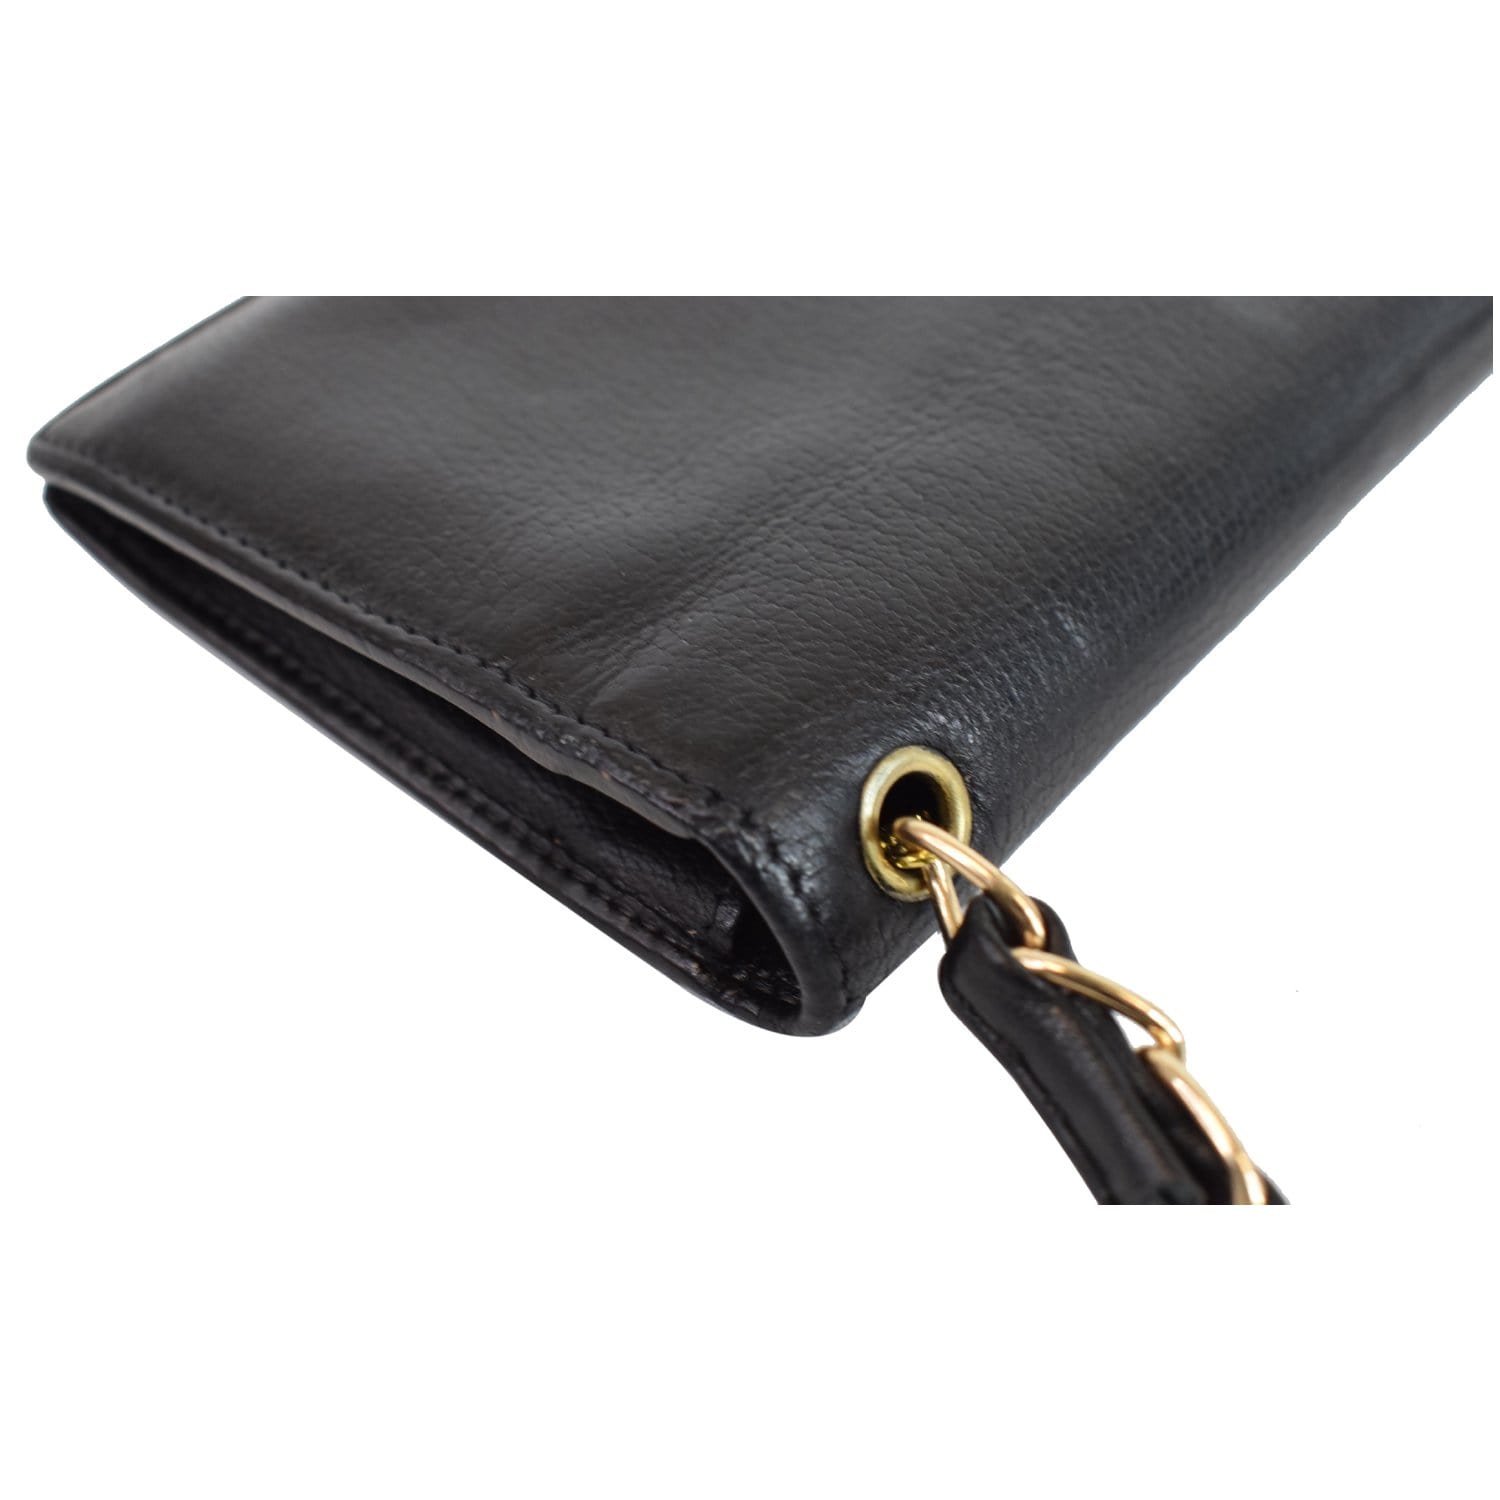 Chanel Camellia Leather Wallet on Chain Shoulder Bag